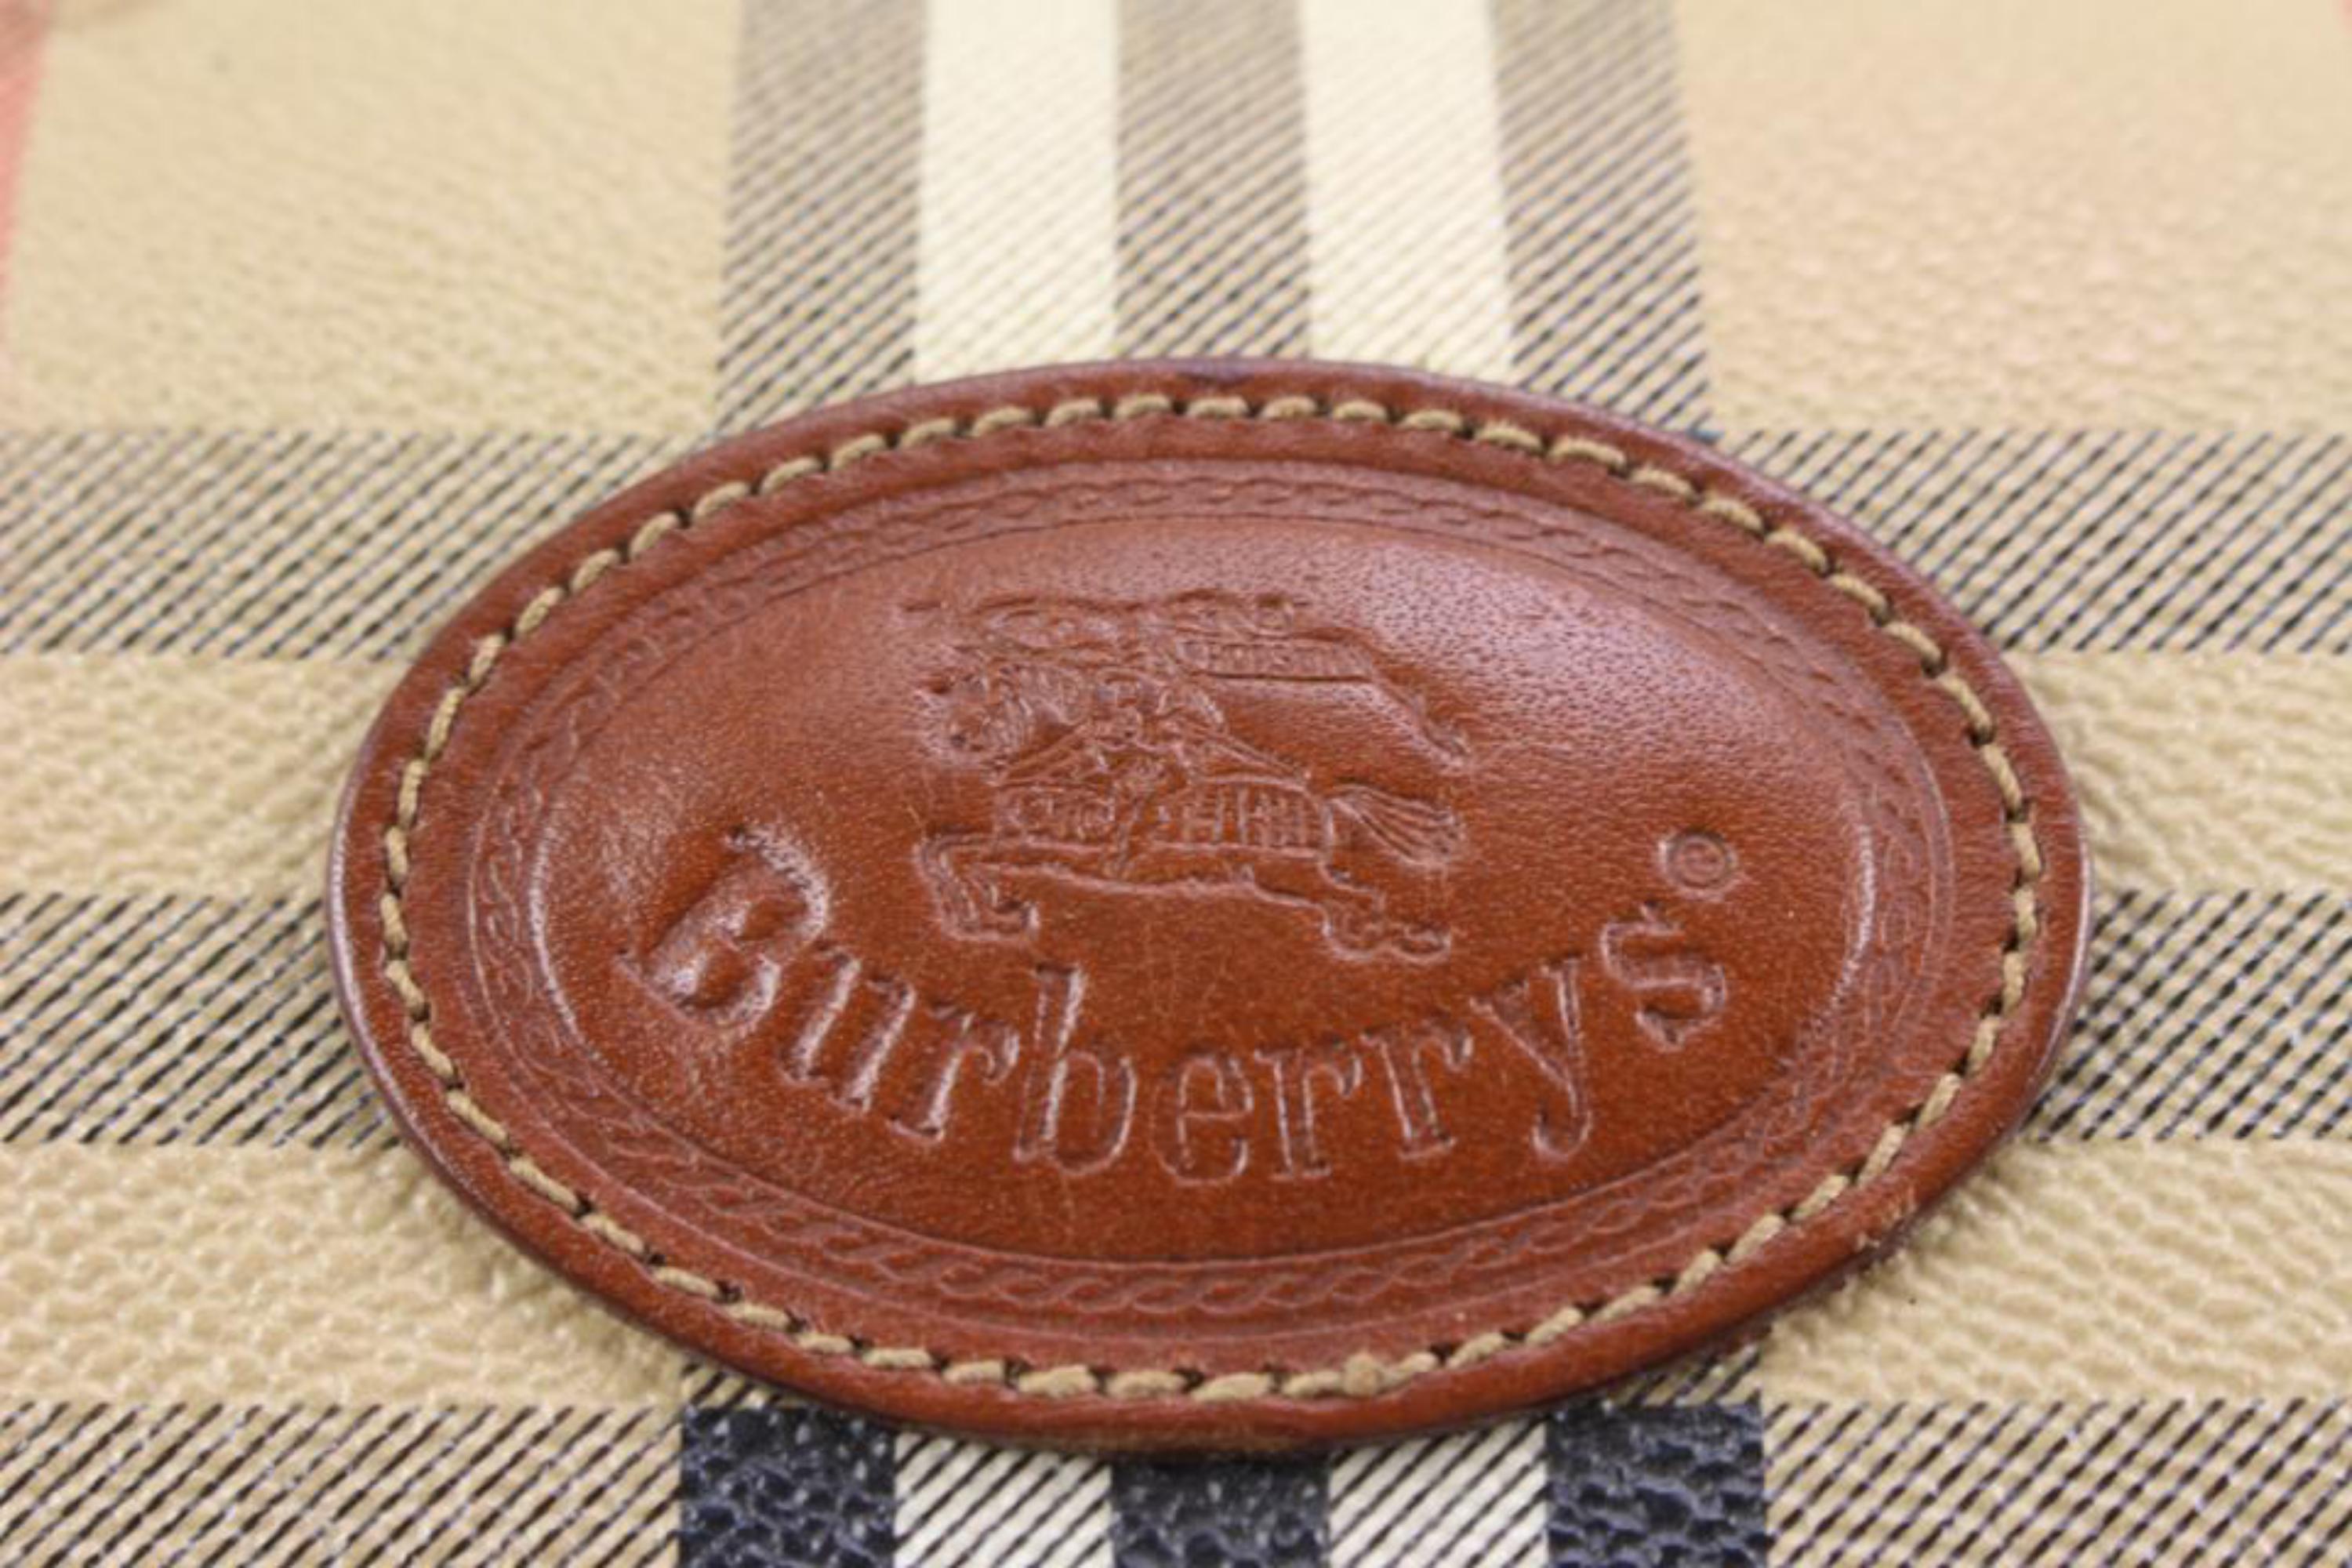 burberry travel bag price